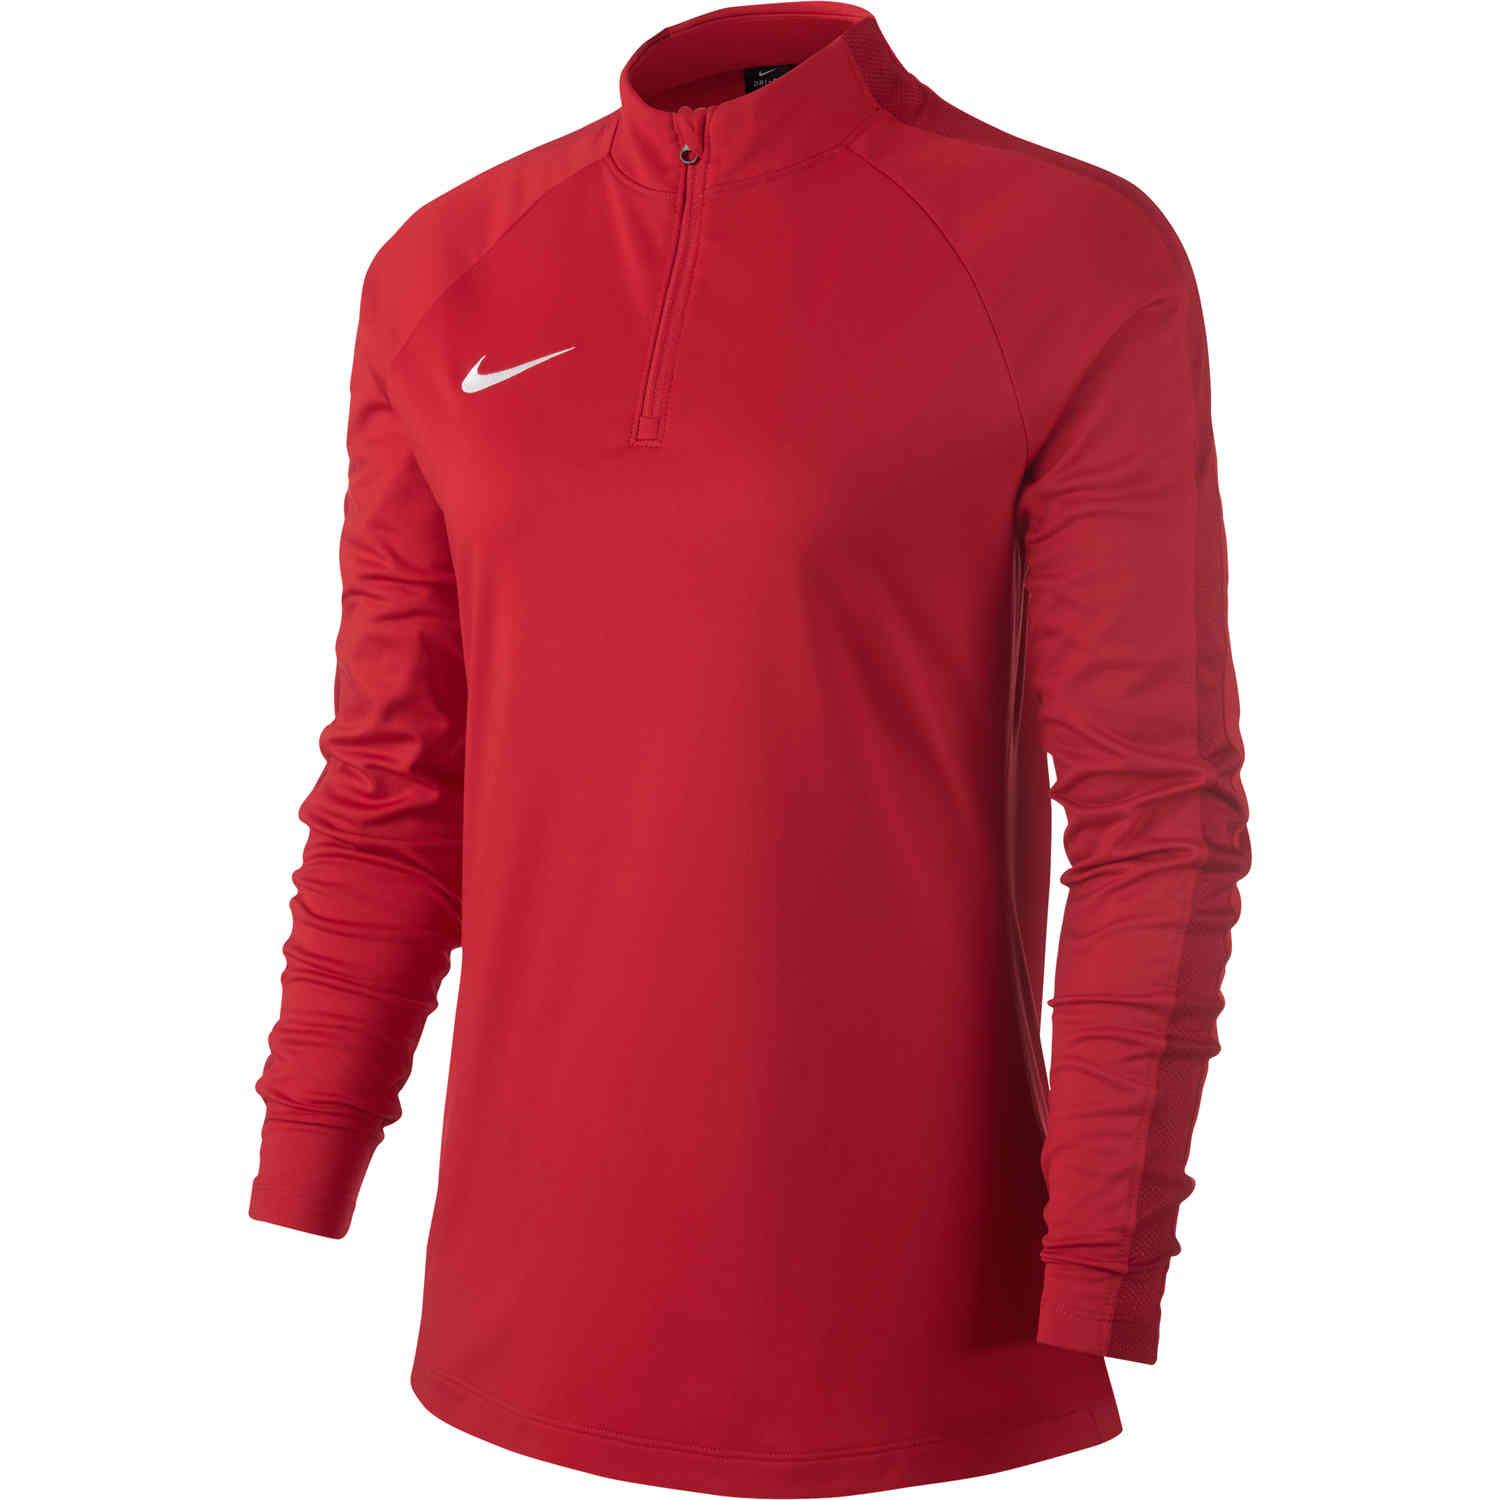 Womens Nike Academy18 Drill Top - University Red - SoccerPro